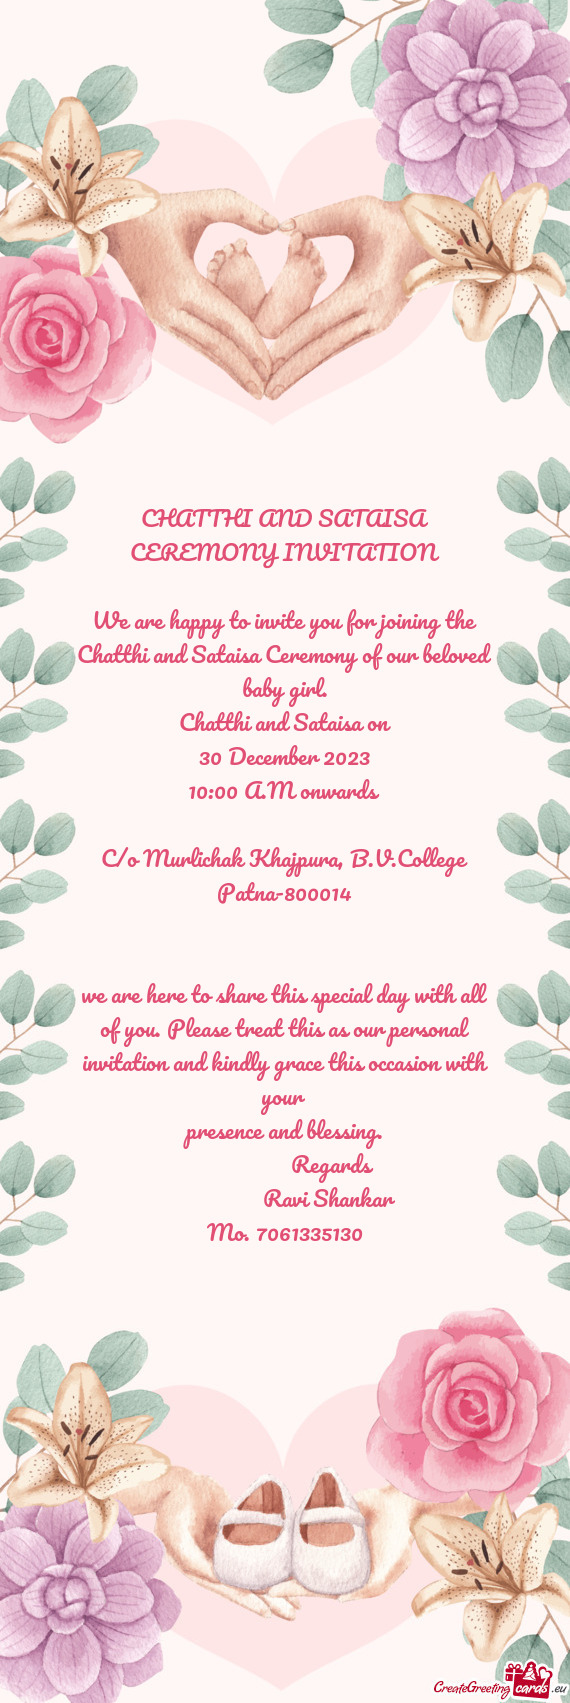 CHATTHI AND SATAISA CEREMONY INVITATION